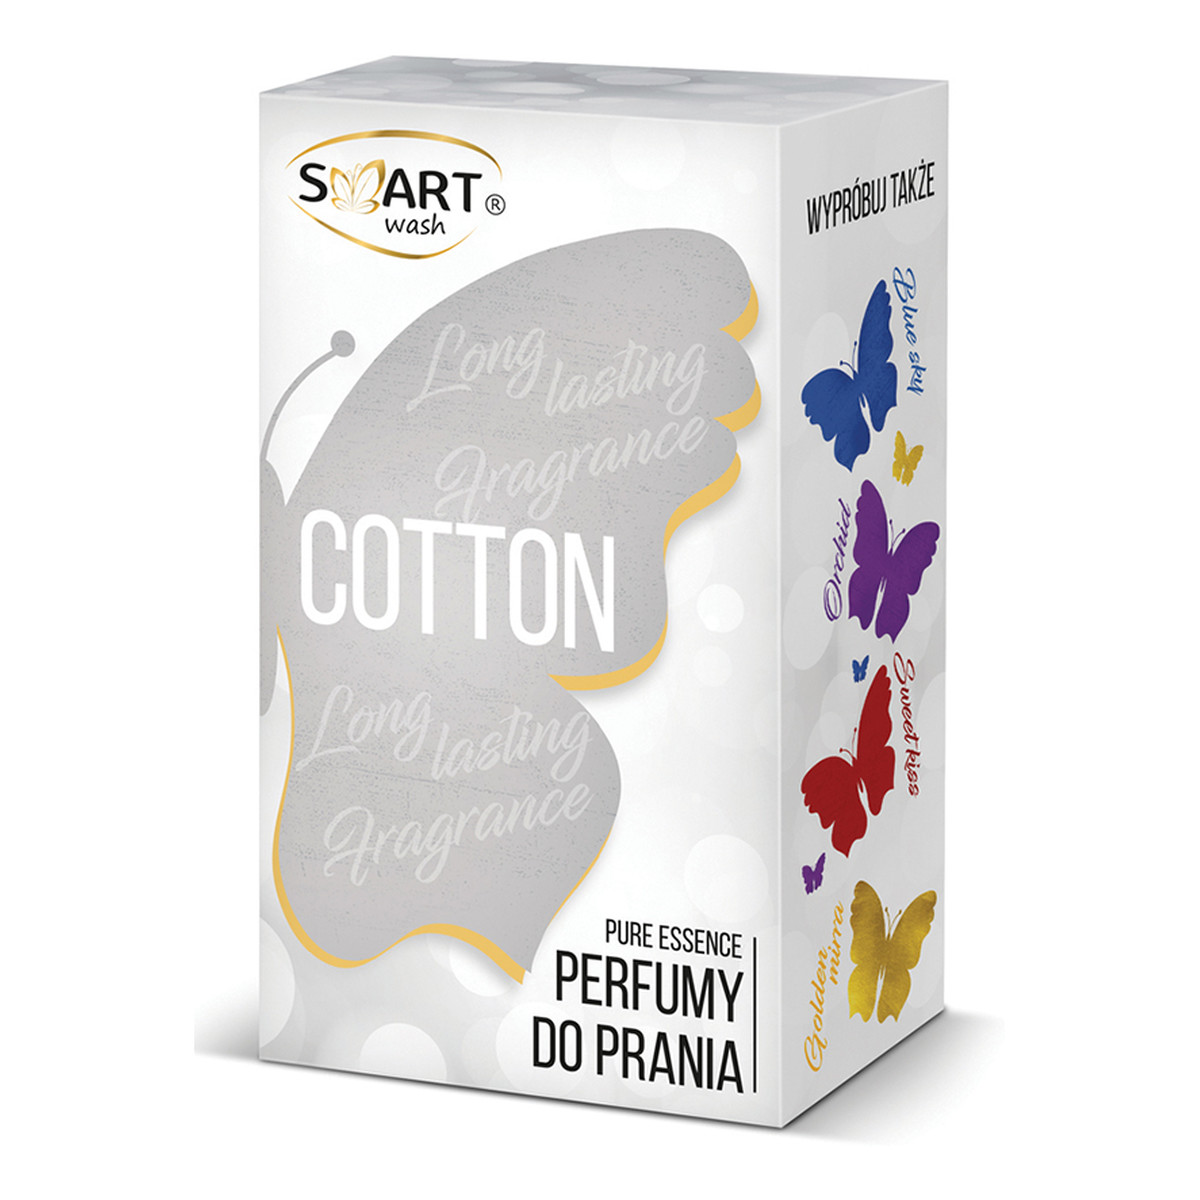 Smart Wash Perfumy do prania Cotton 100ml